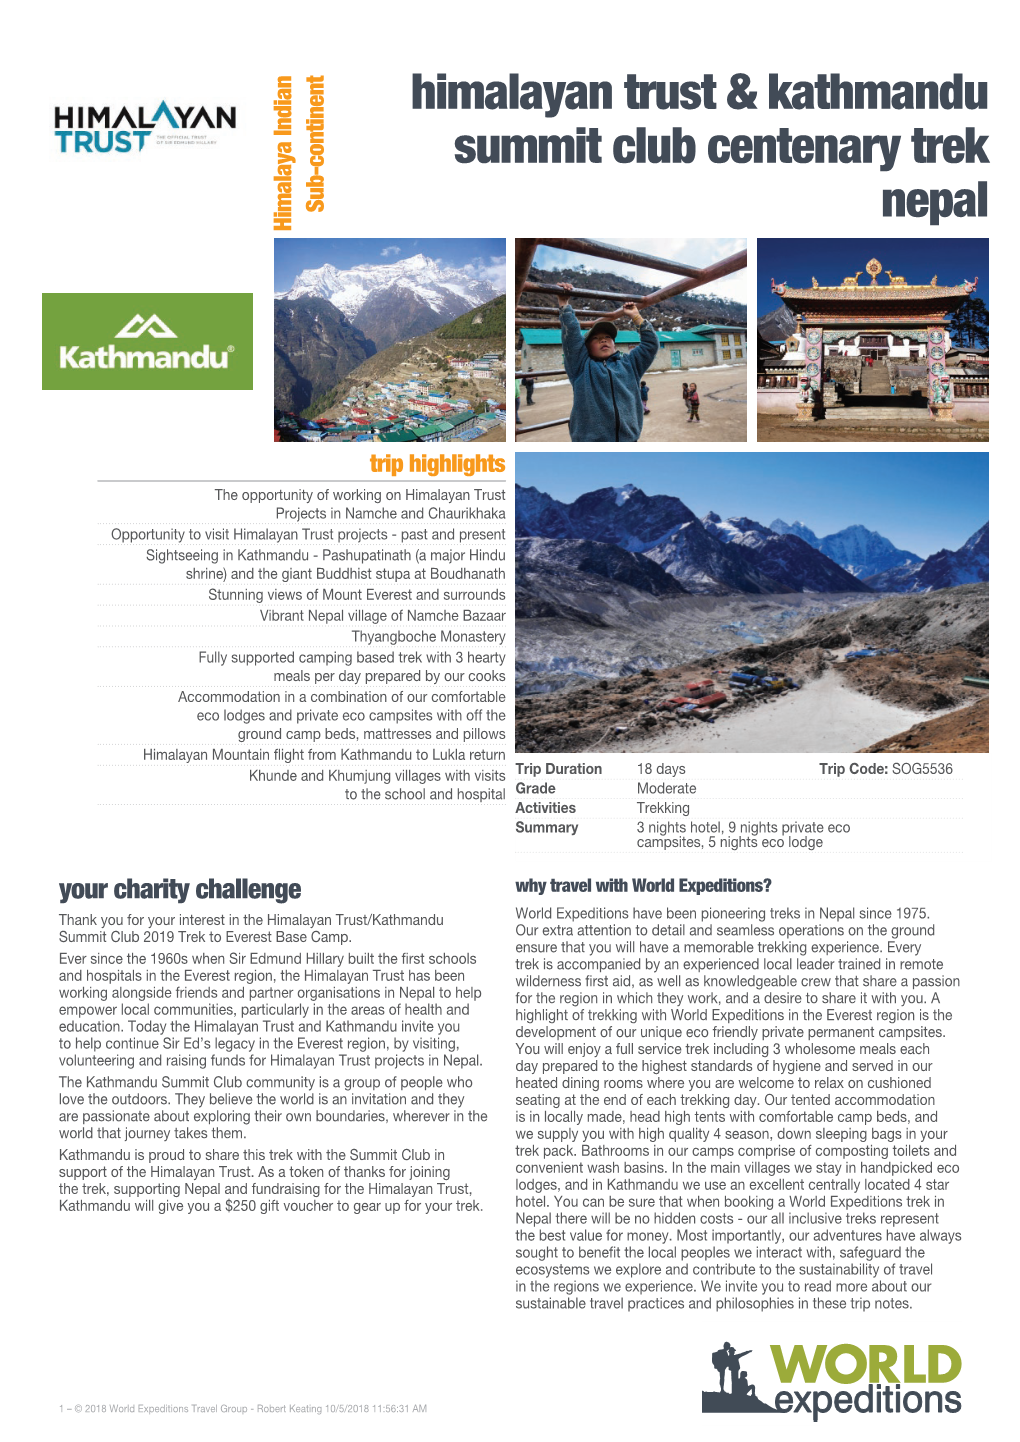 Himalayan Trust & Kathmandu Summit Club Centenary Trek Nepal